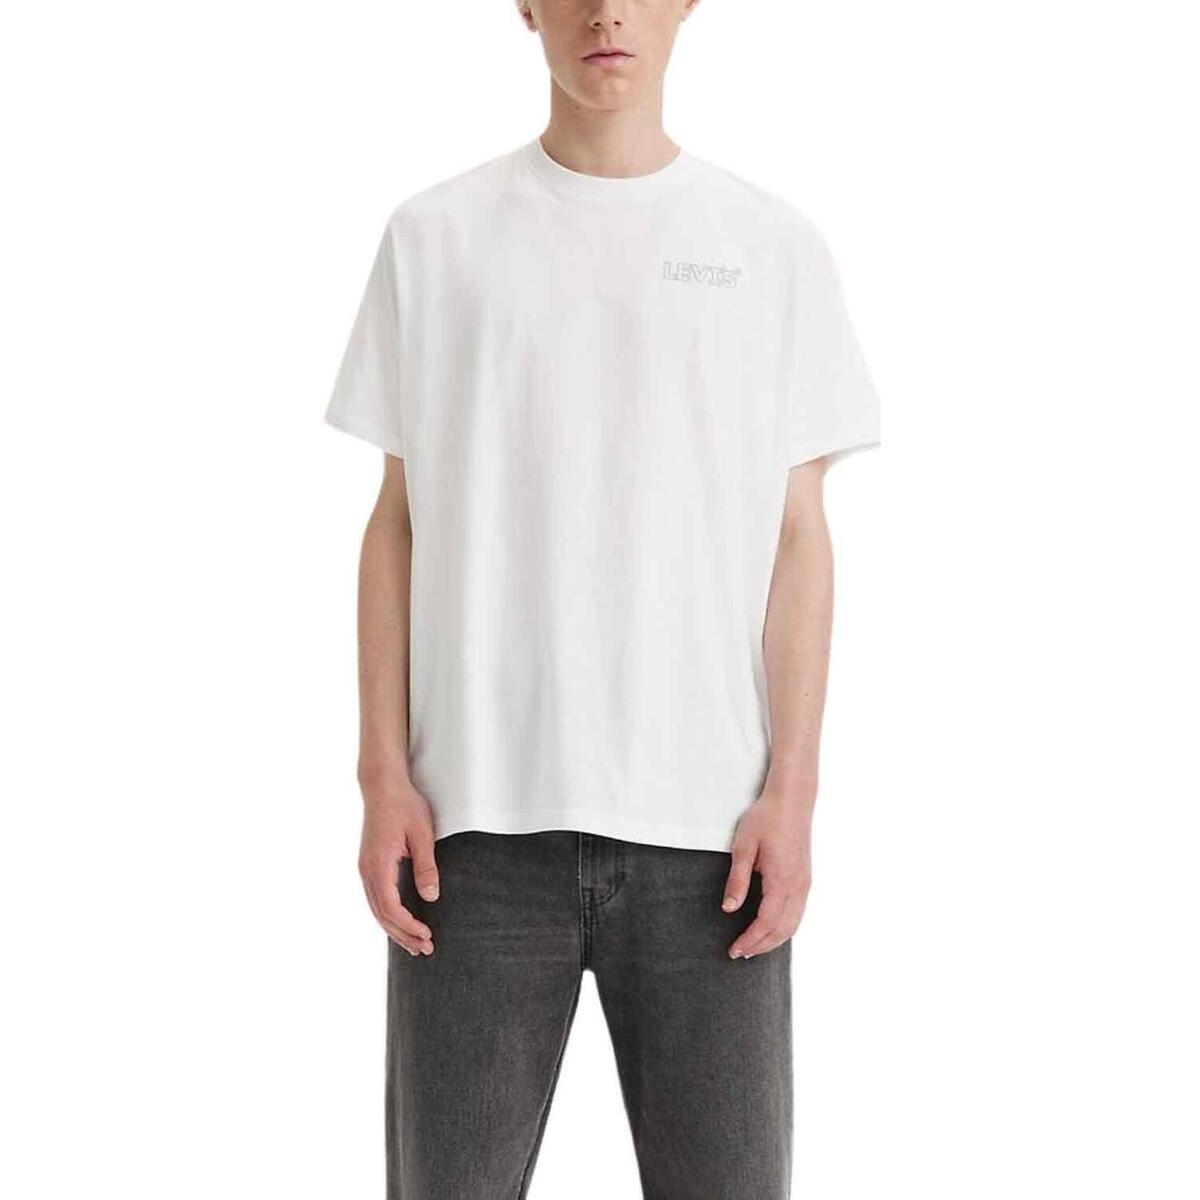 Textil T-Shirt mangas curtas Levi's  Branco